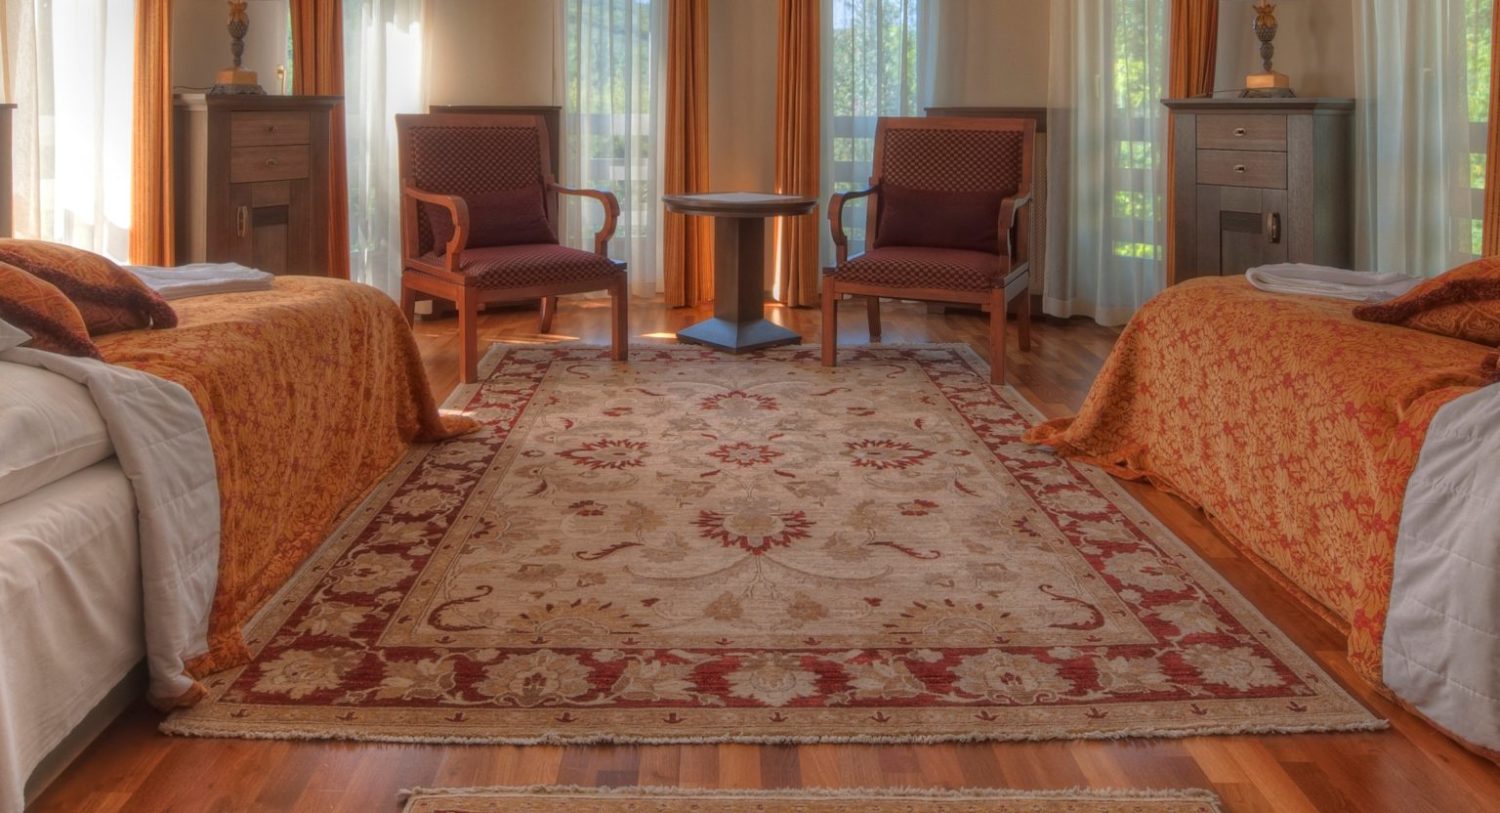 oriental rug on hardwood floor in sitting room